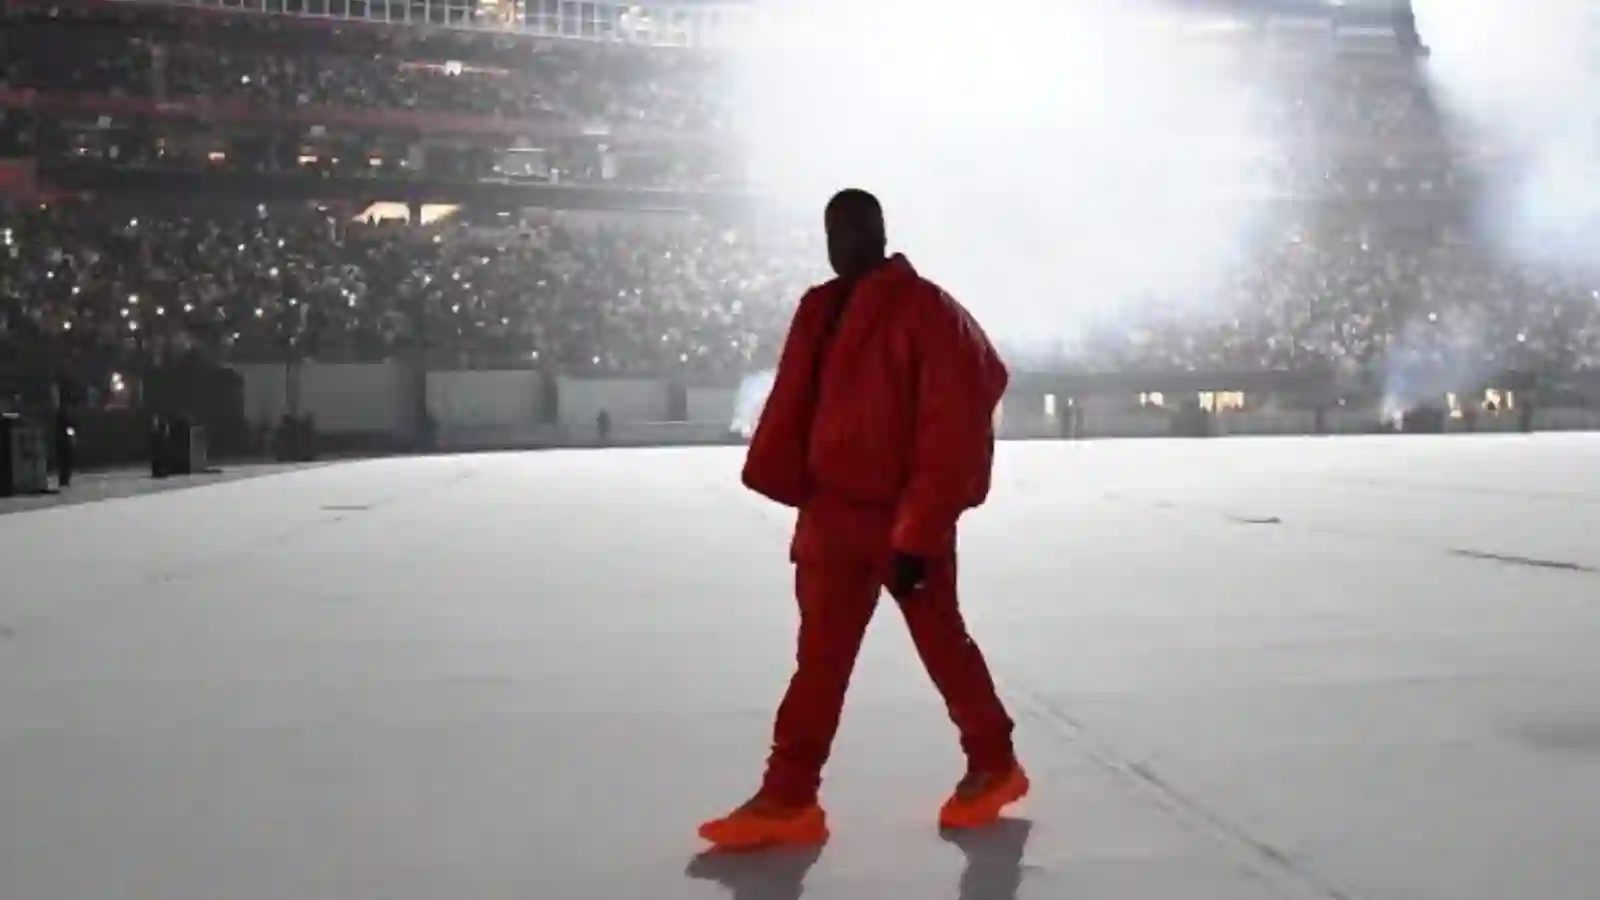 Kanye West during 'Donda' listening party